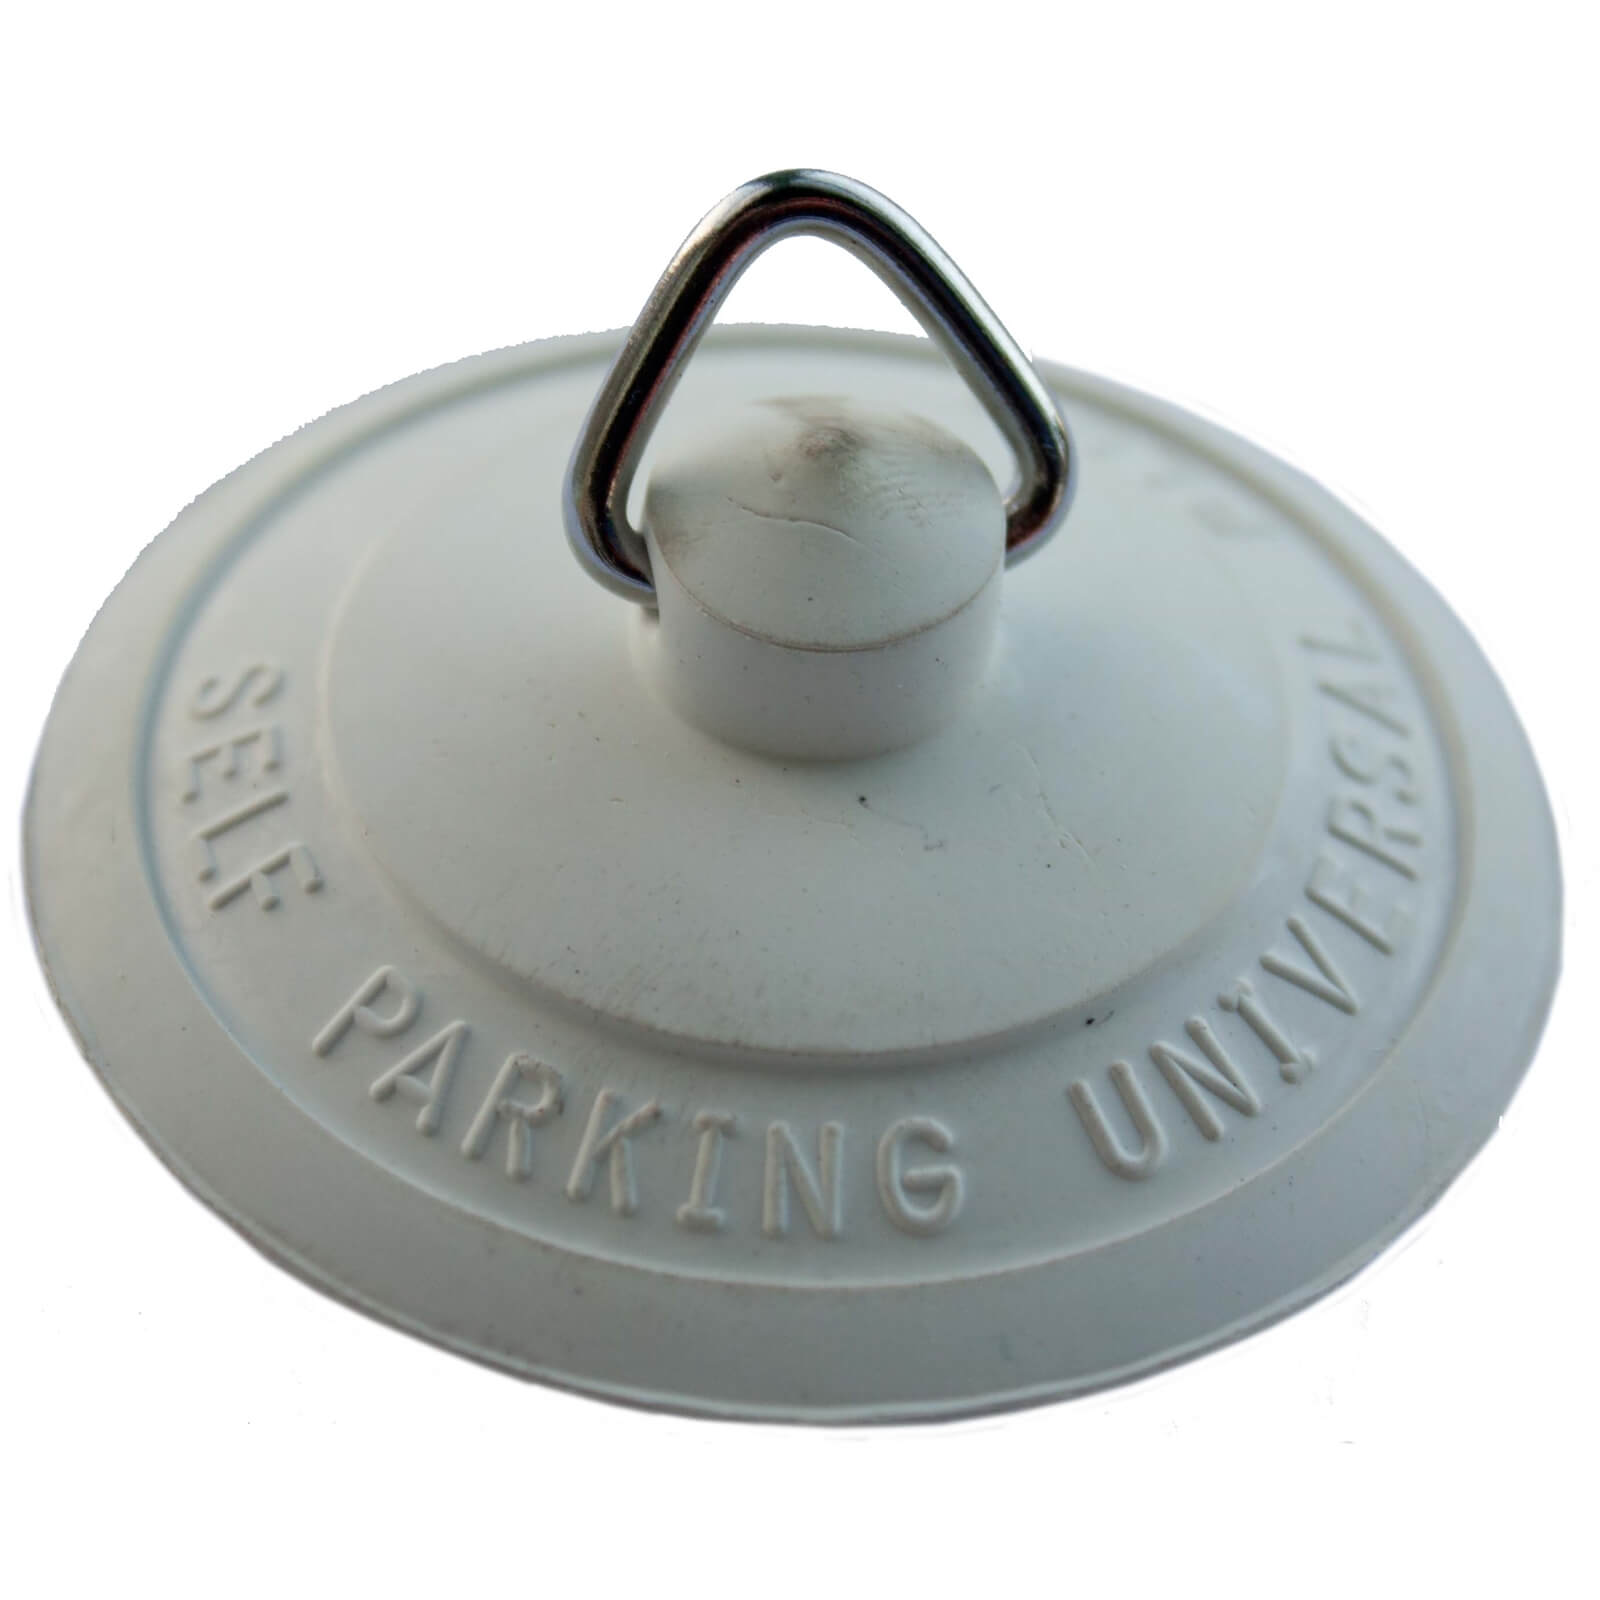 Self Parking Handbasin Plug